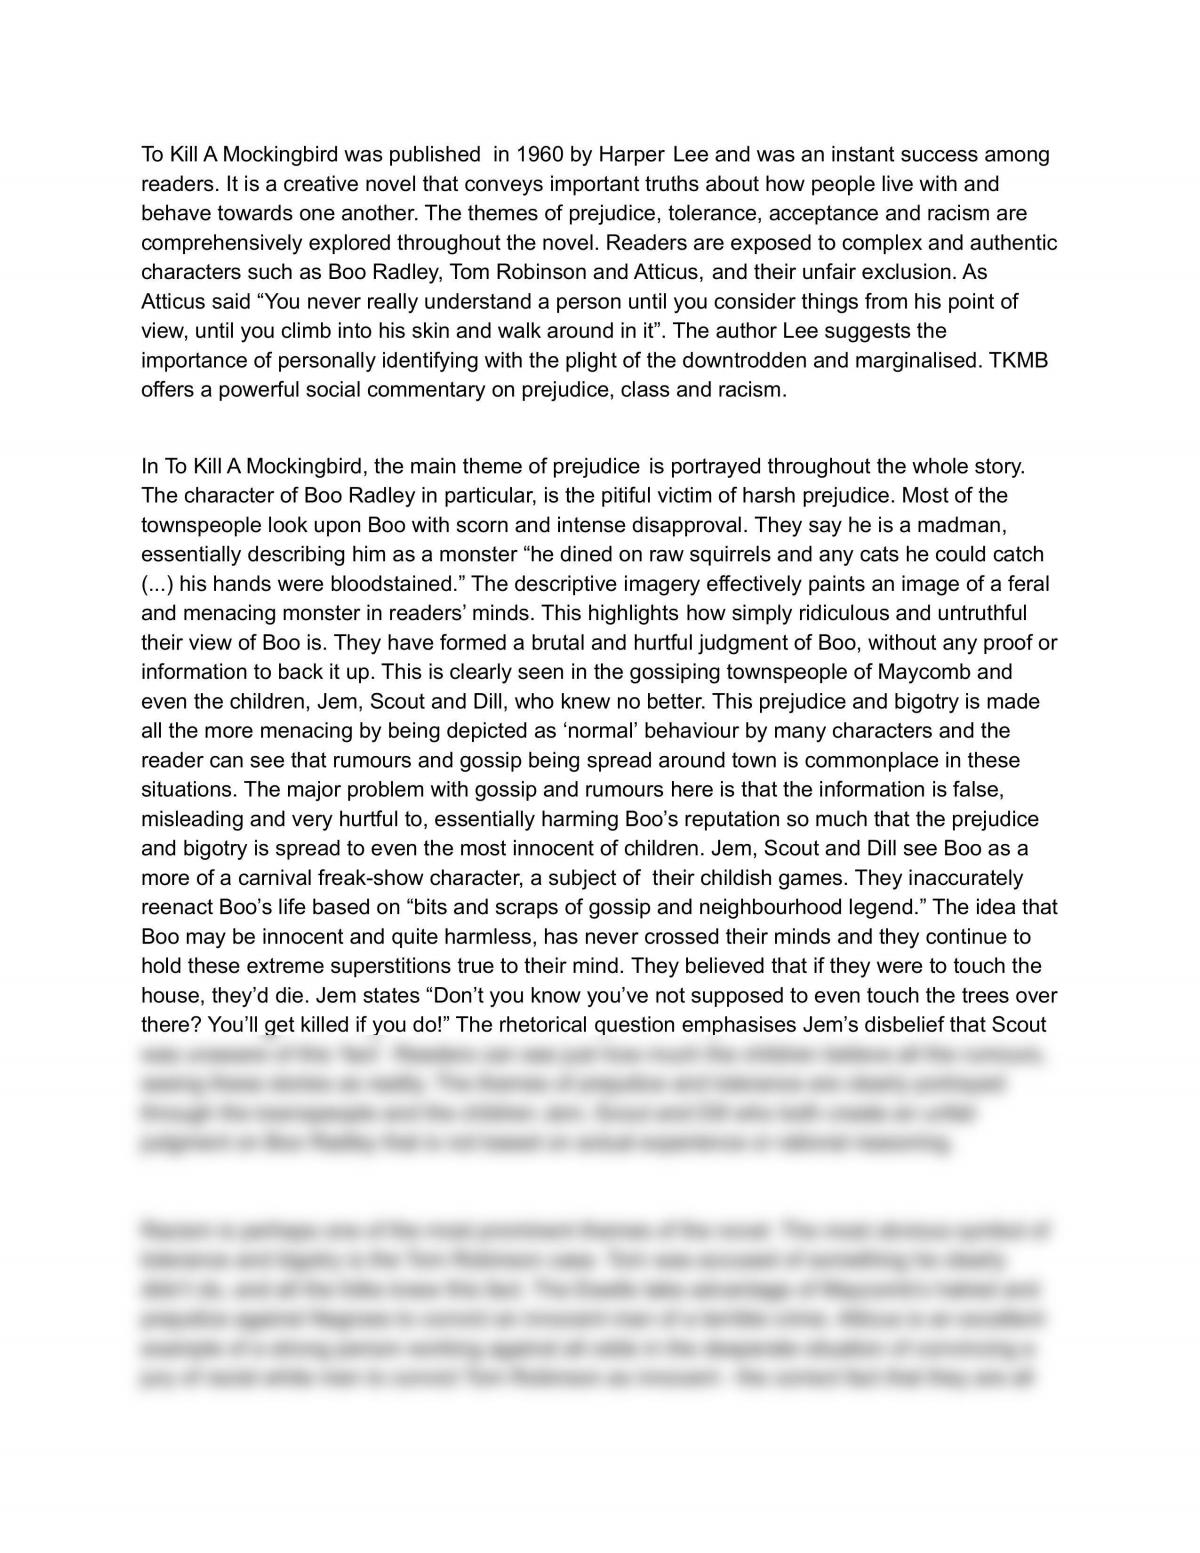 to kill a mockingbird essay examples pdf